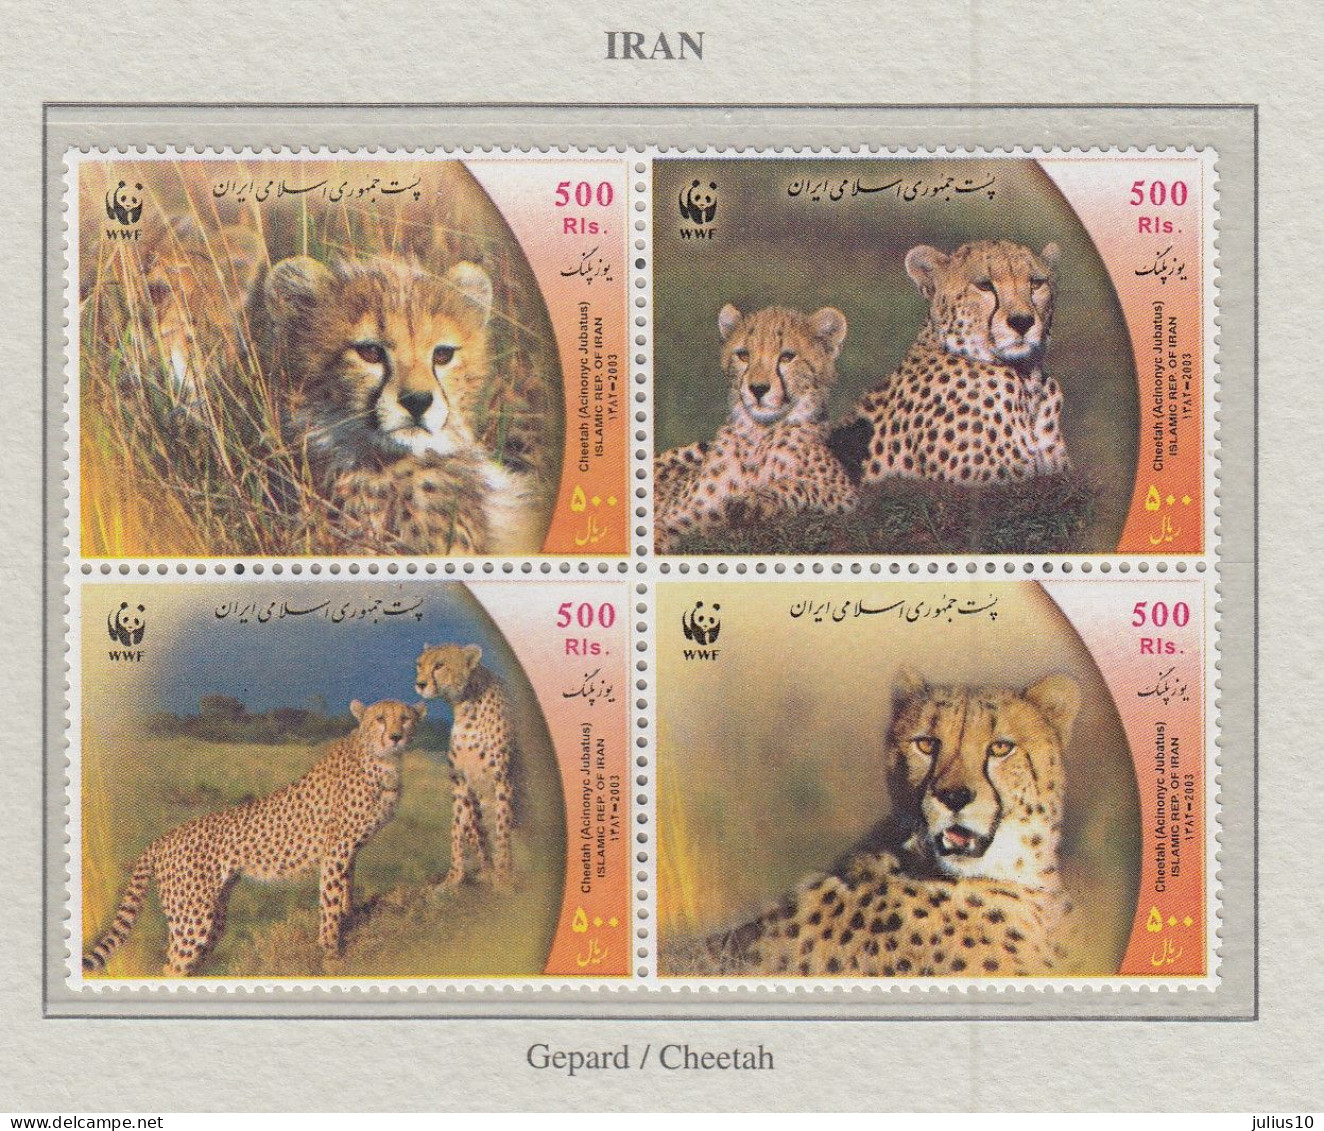 IRAN 2003 WWF Wild Cats Mi 2932-2935 MNH Fauna 676 - Big Cats (cats Of Prey)